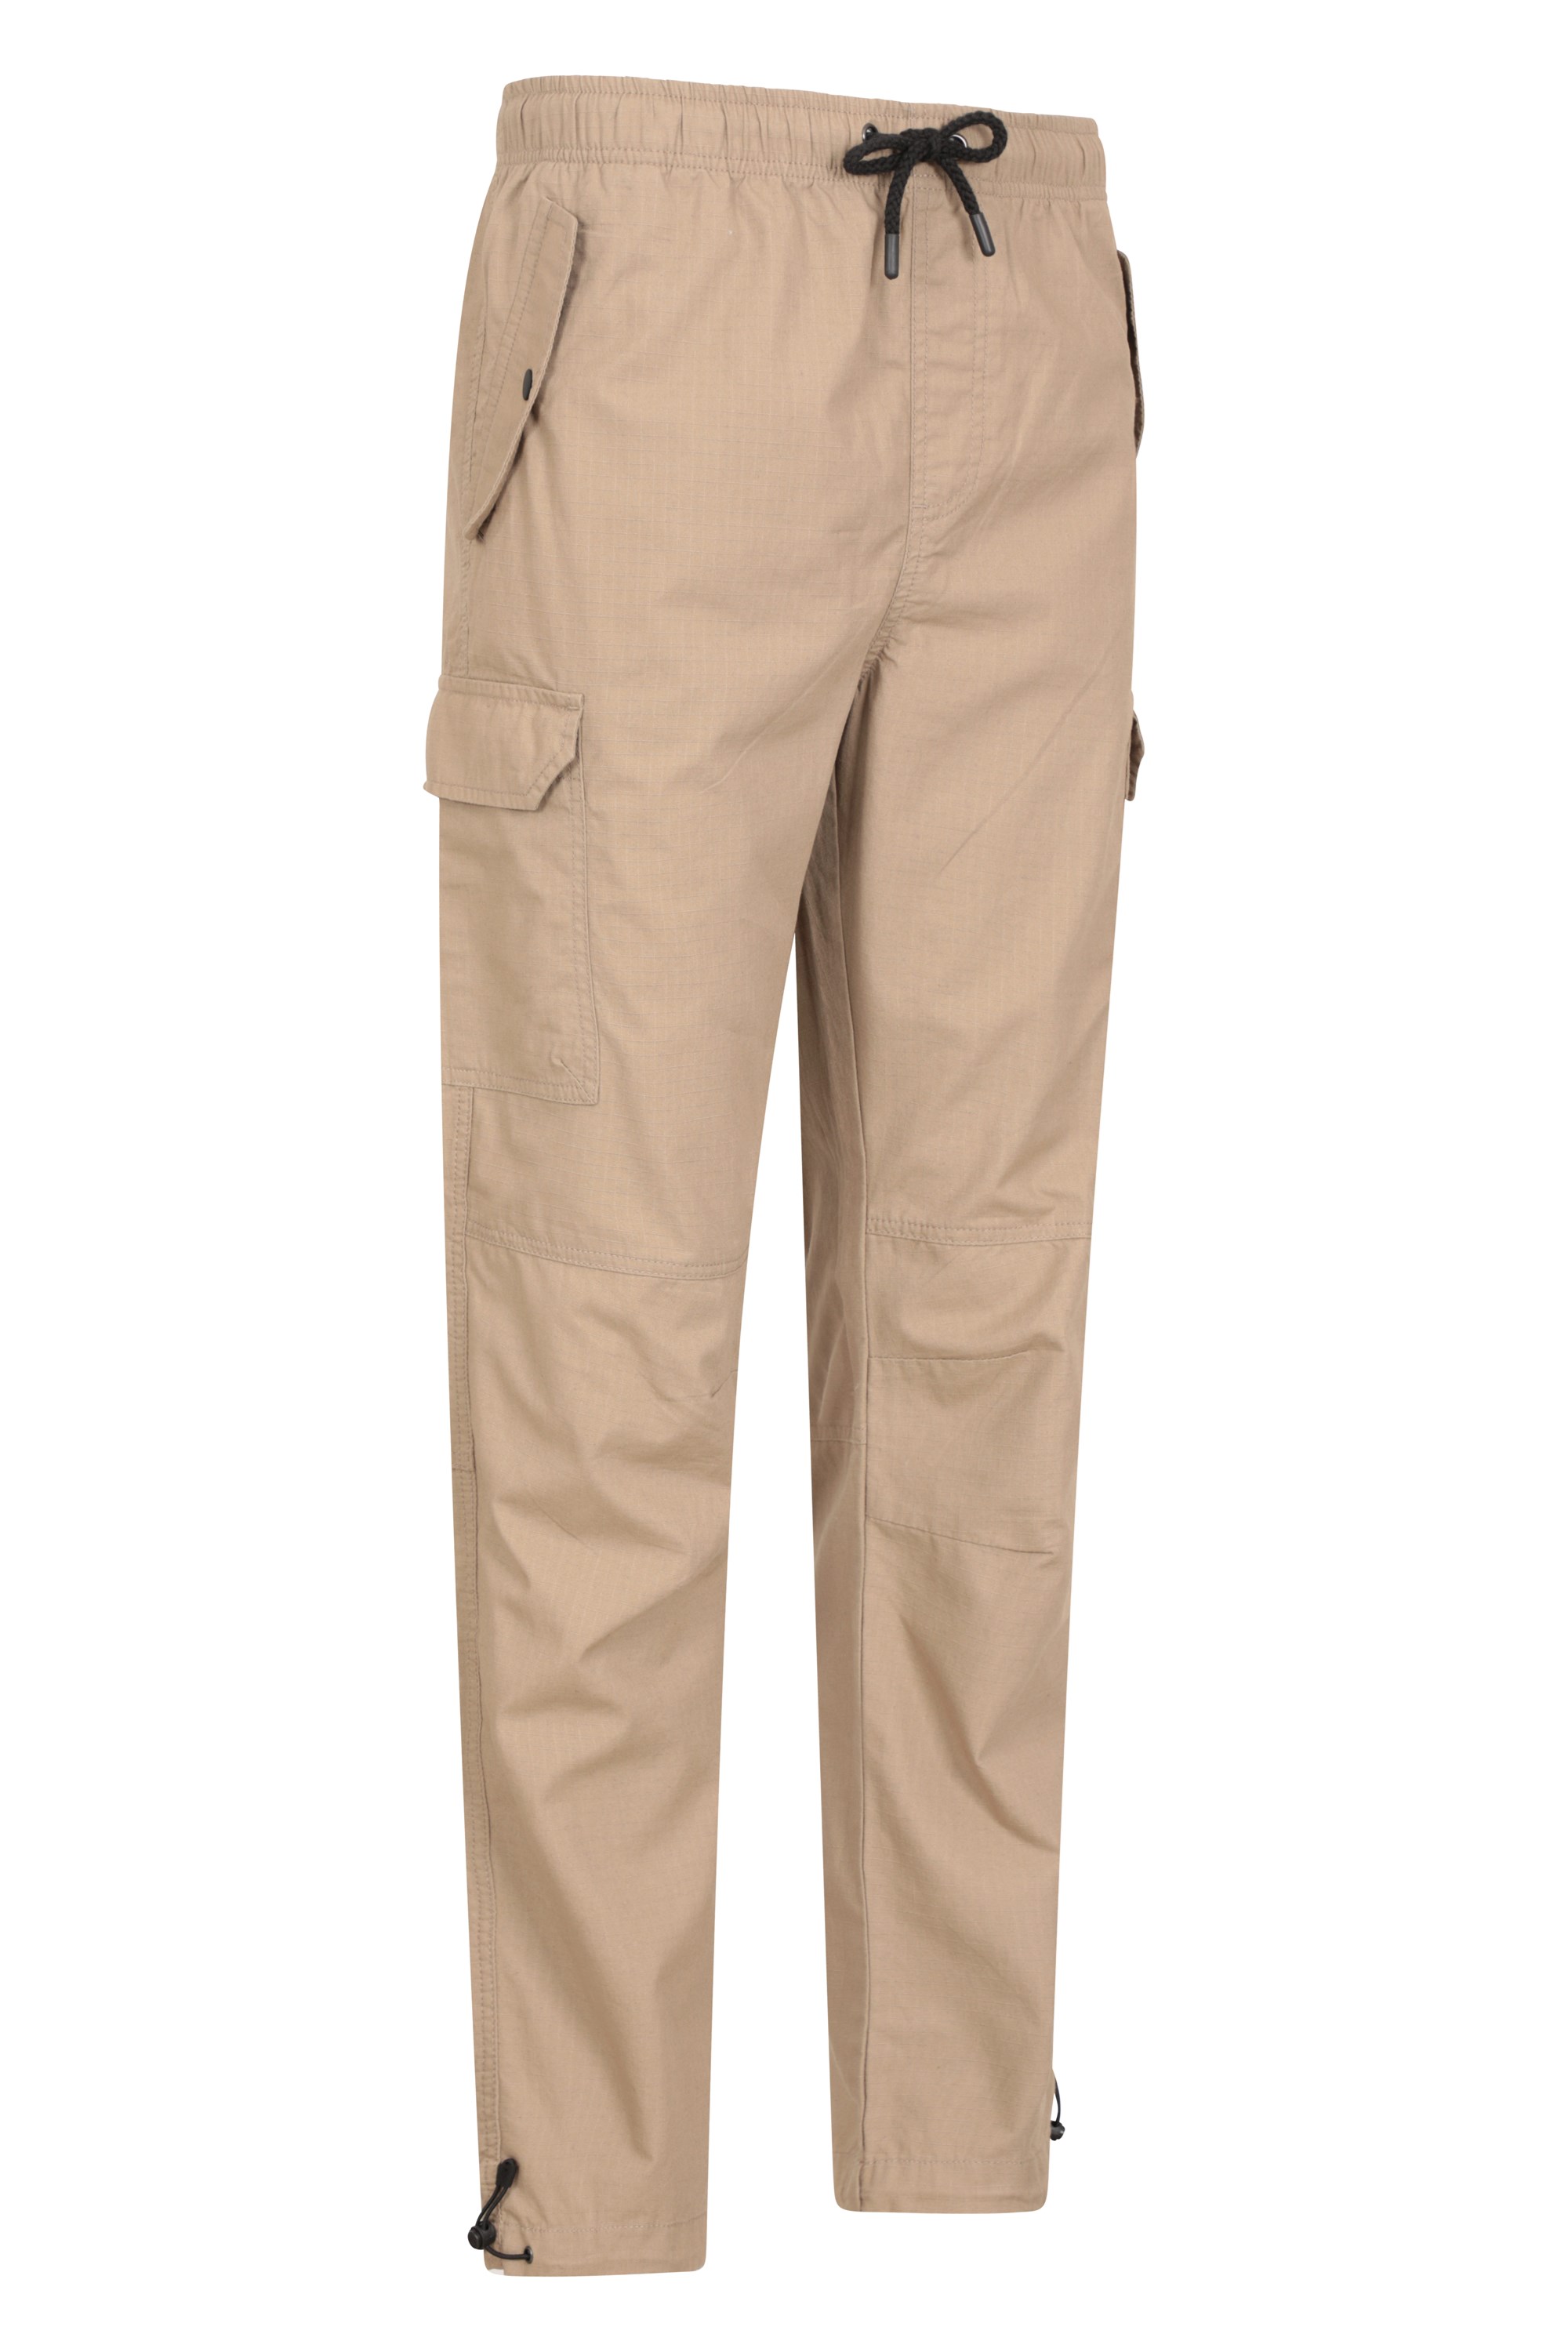 IZhansean Mens Jogger Sweatpants Streetwear Fitting Casual Long Pants  Drawstring Cargo Trousers Khaki M - Walmart.com